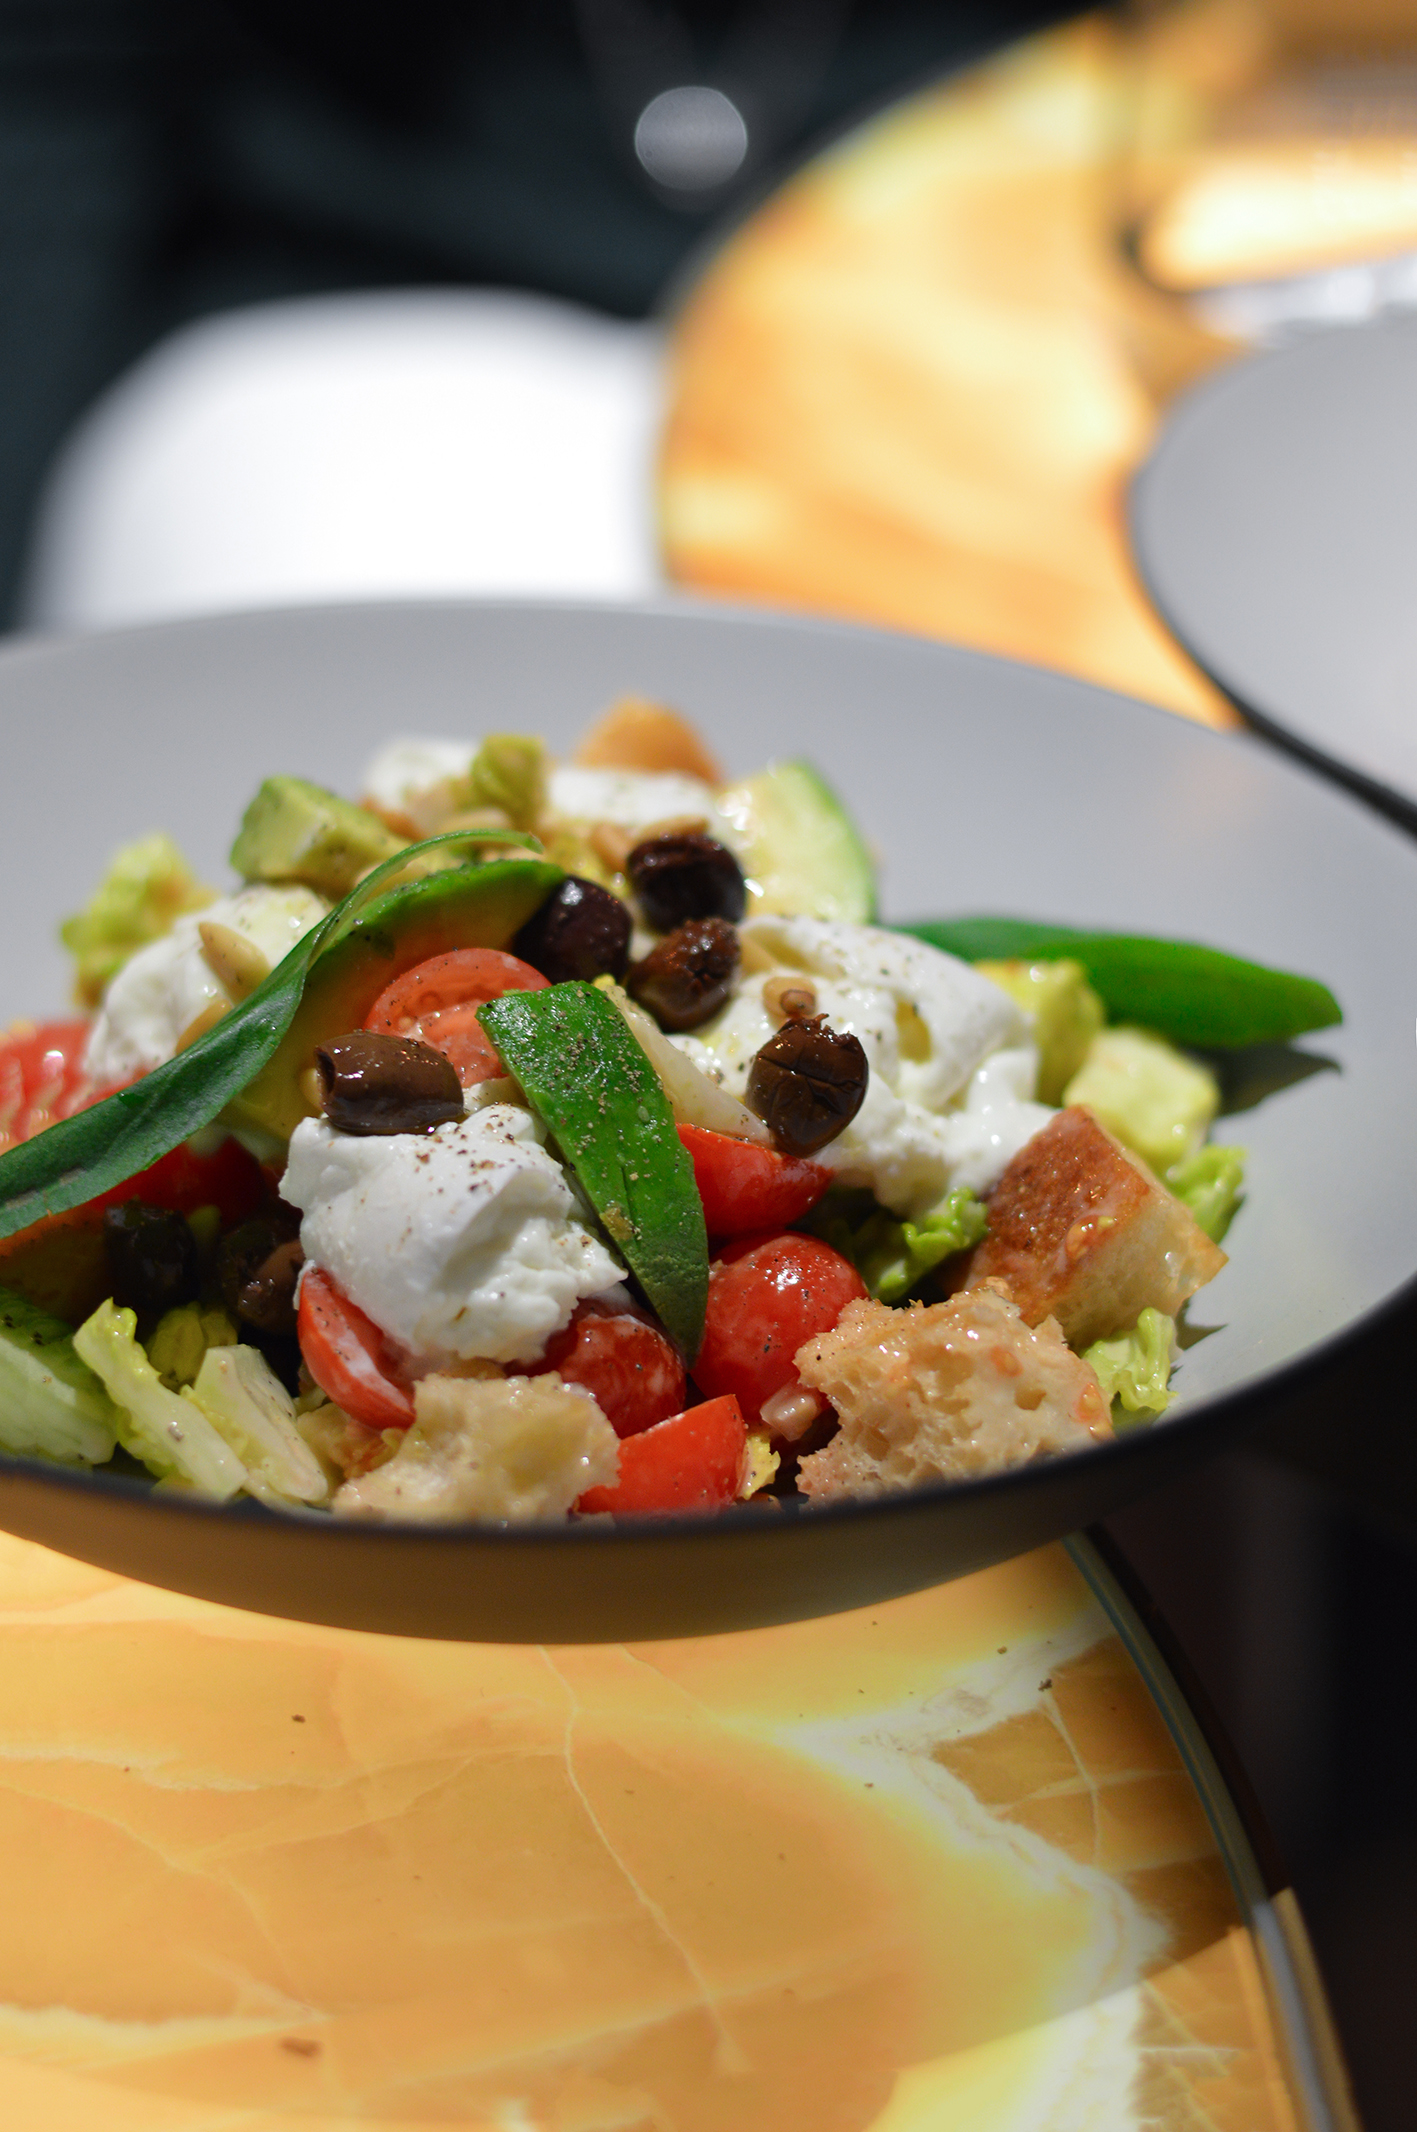 Salad - Your Vienna